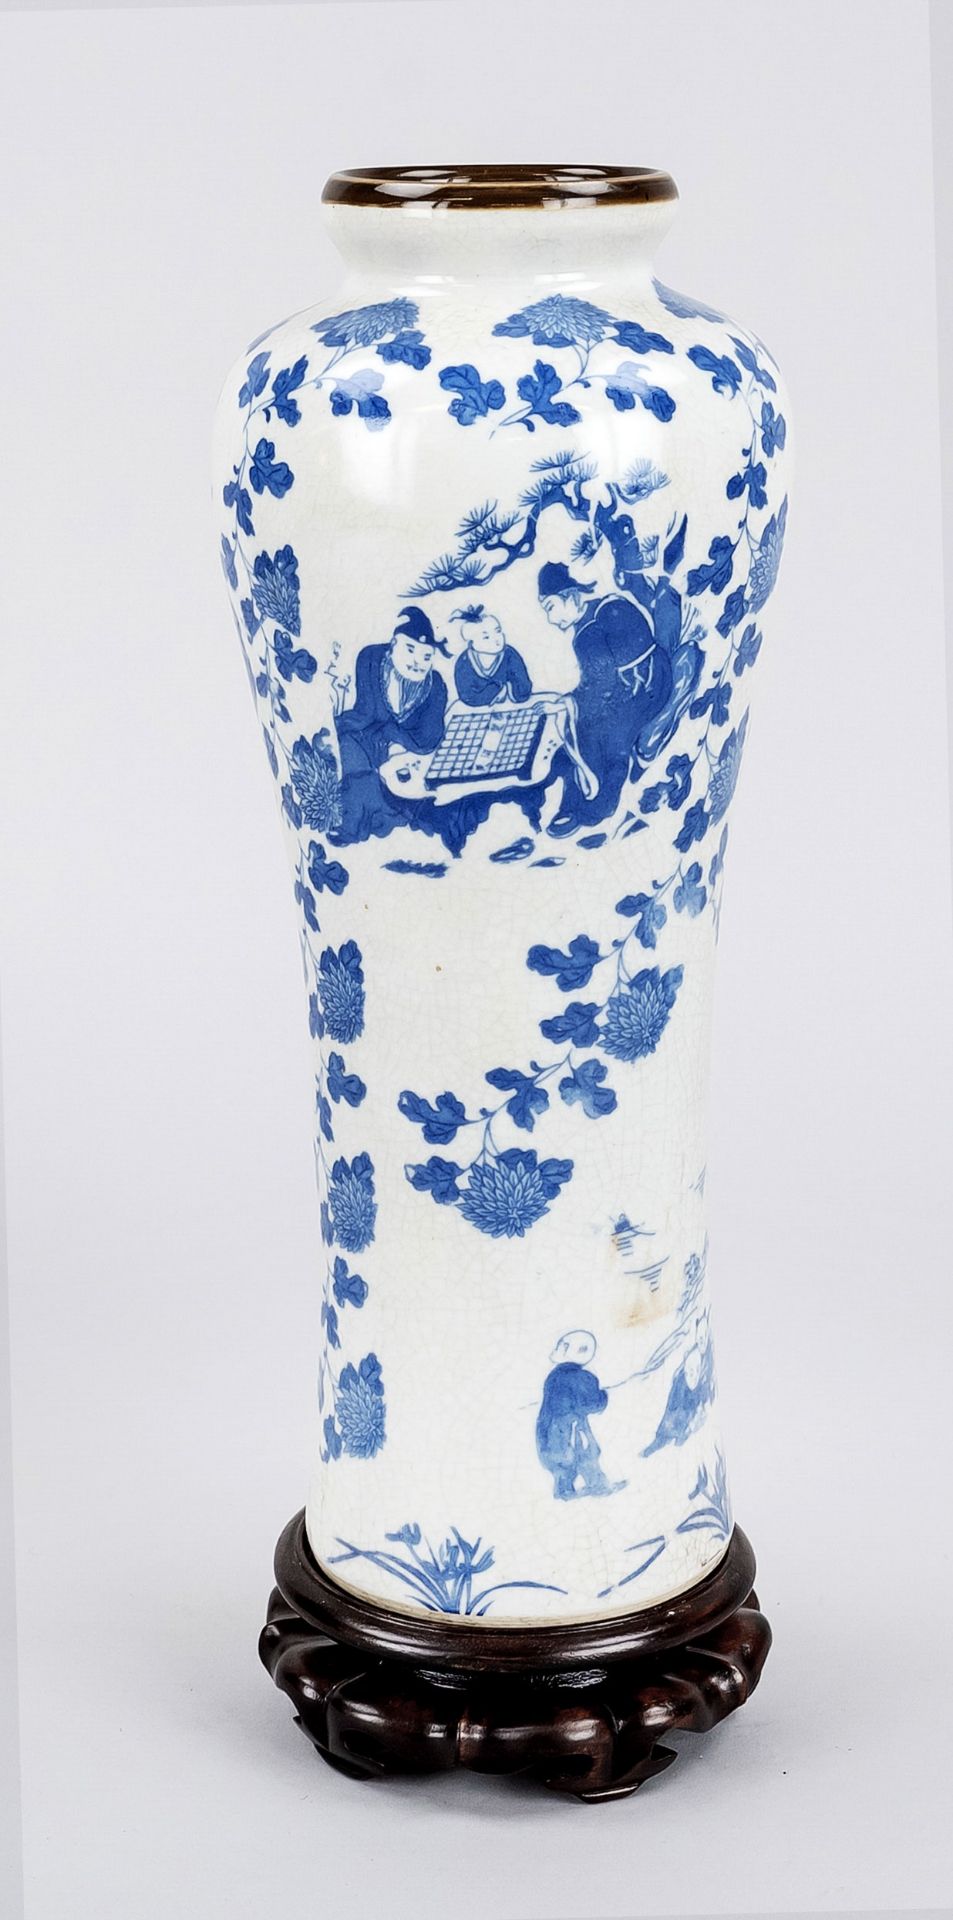 Slender shoulder vase, China, Republic period(1912-1949), porcelain with delicate craquelé and